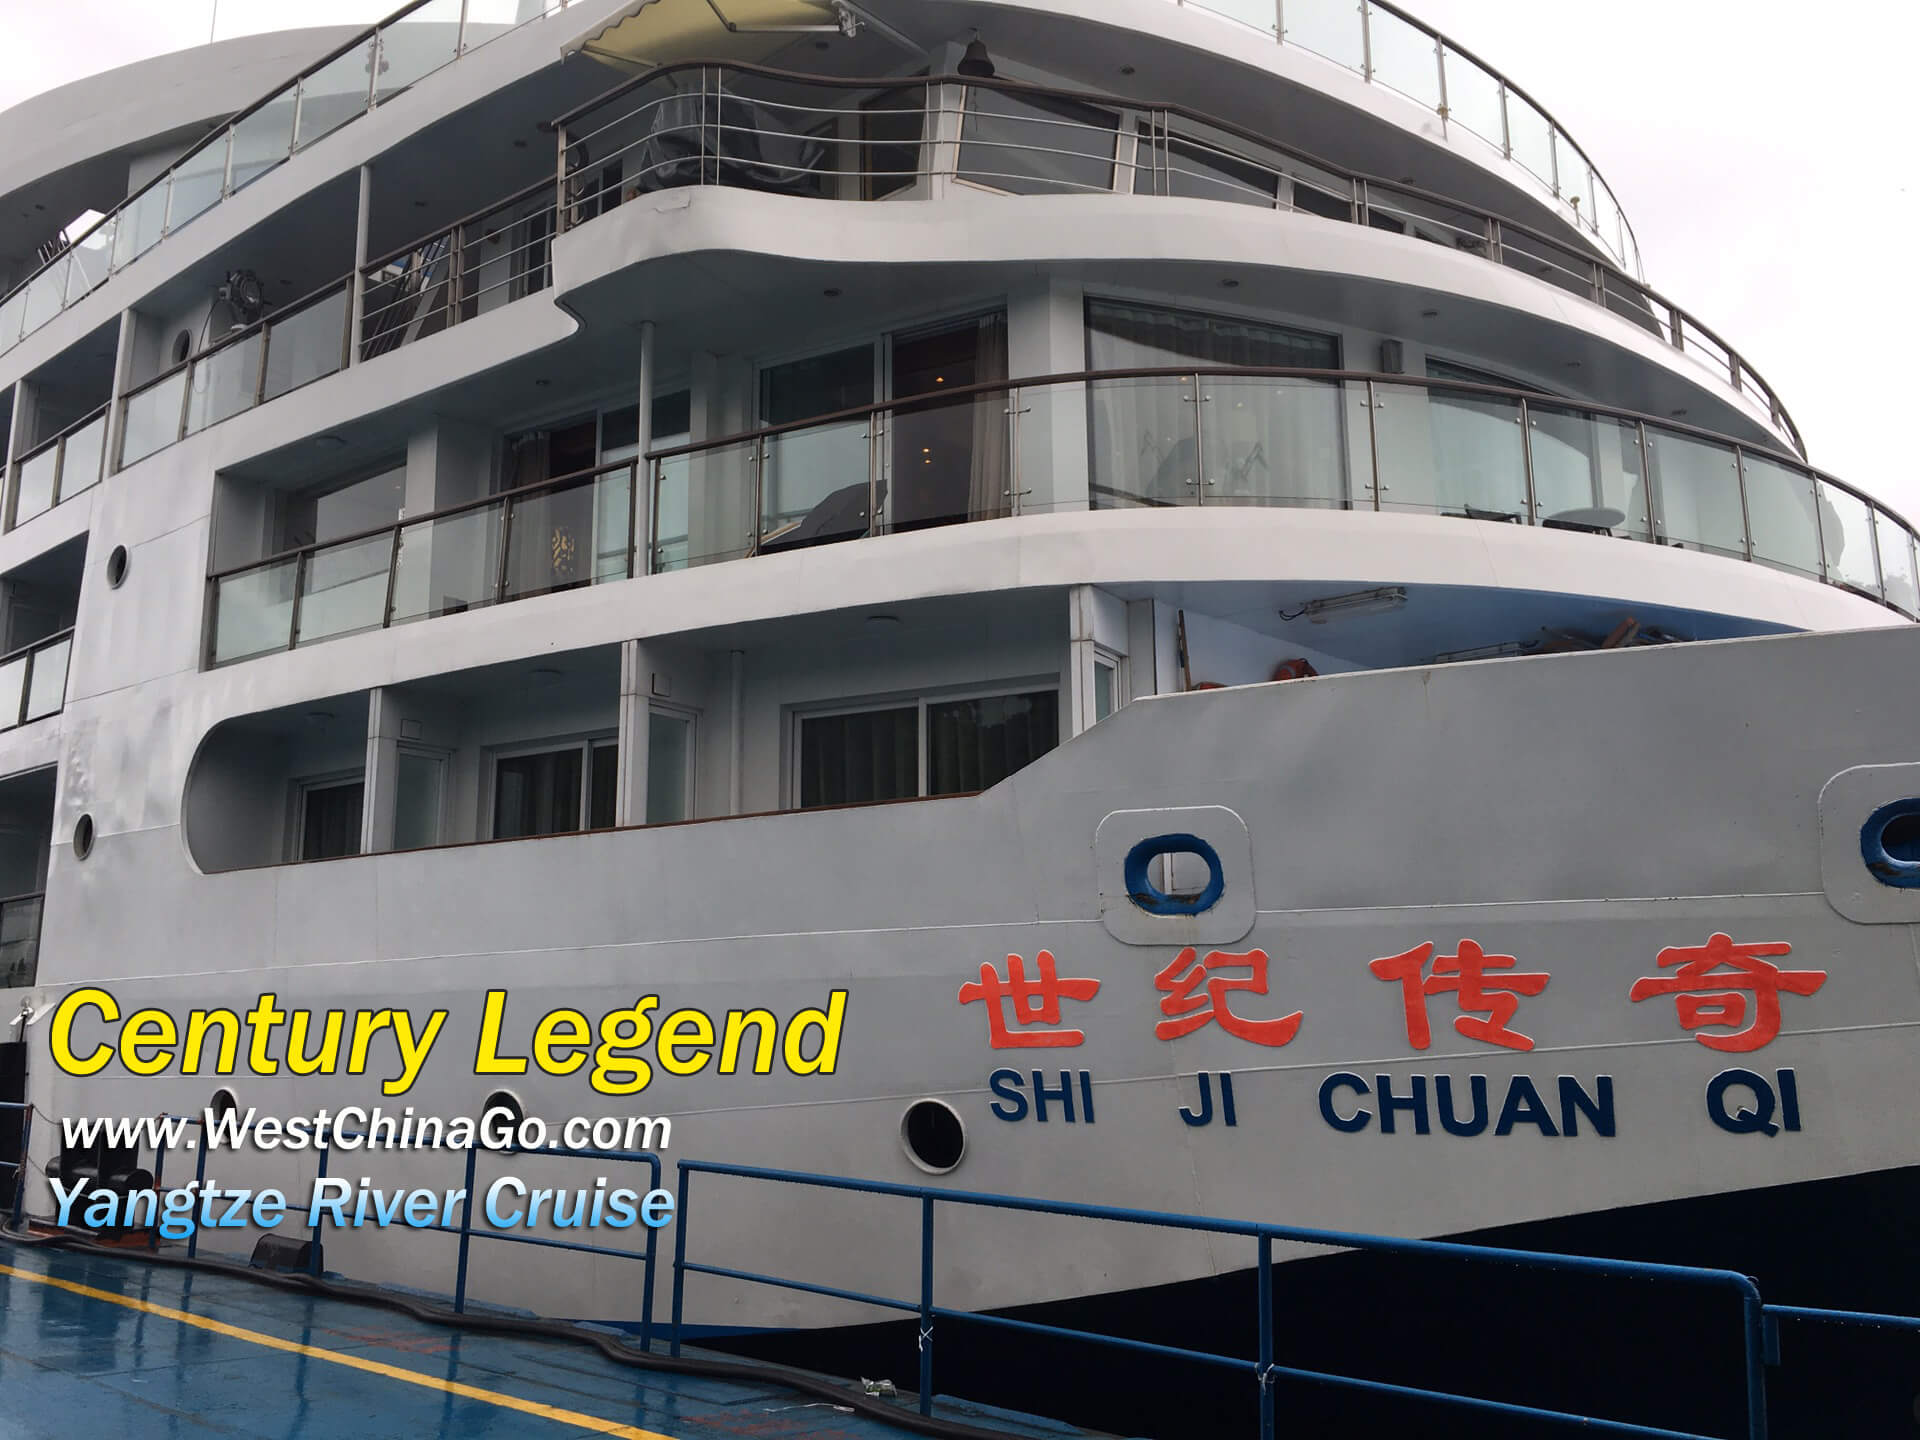 China yangtze river cruise